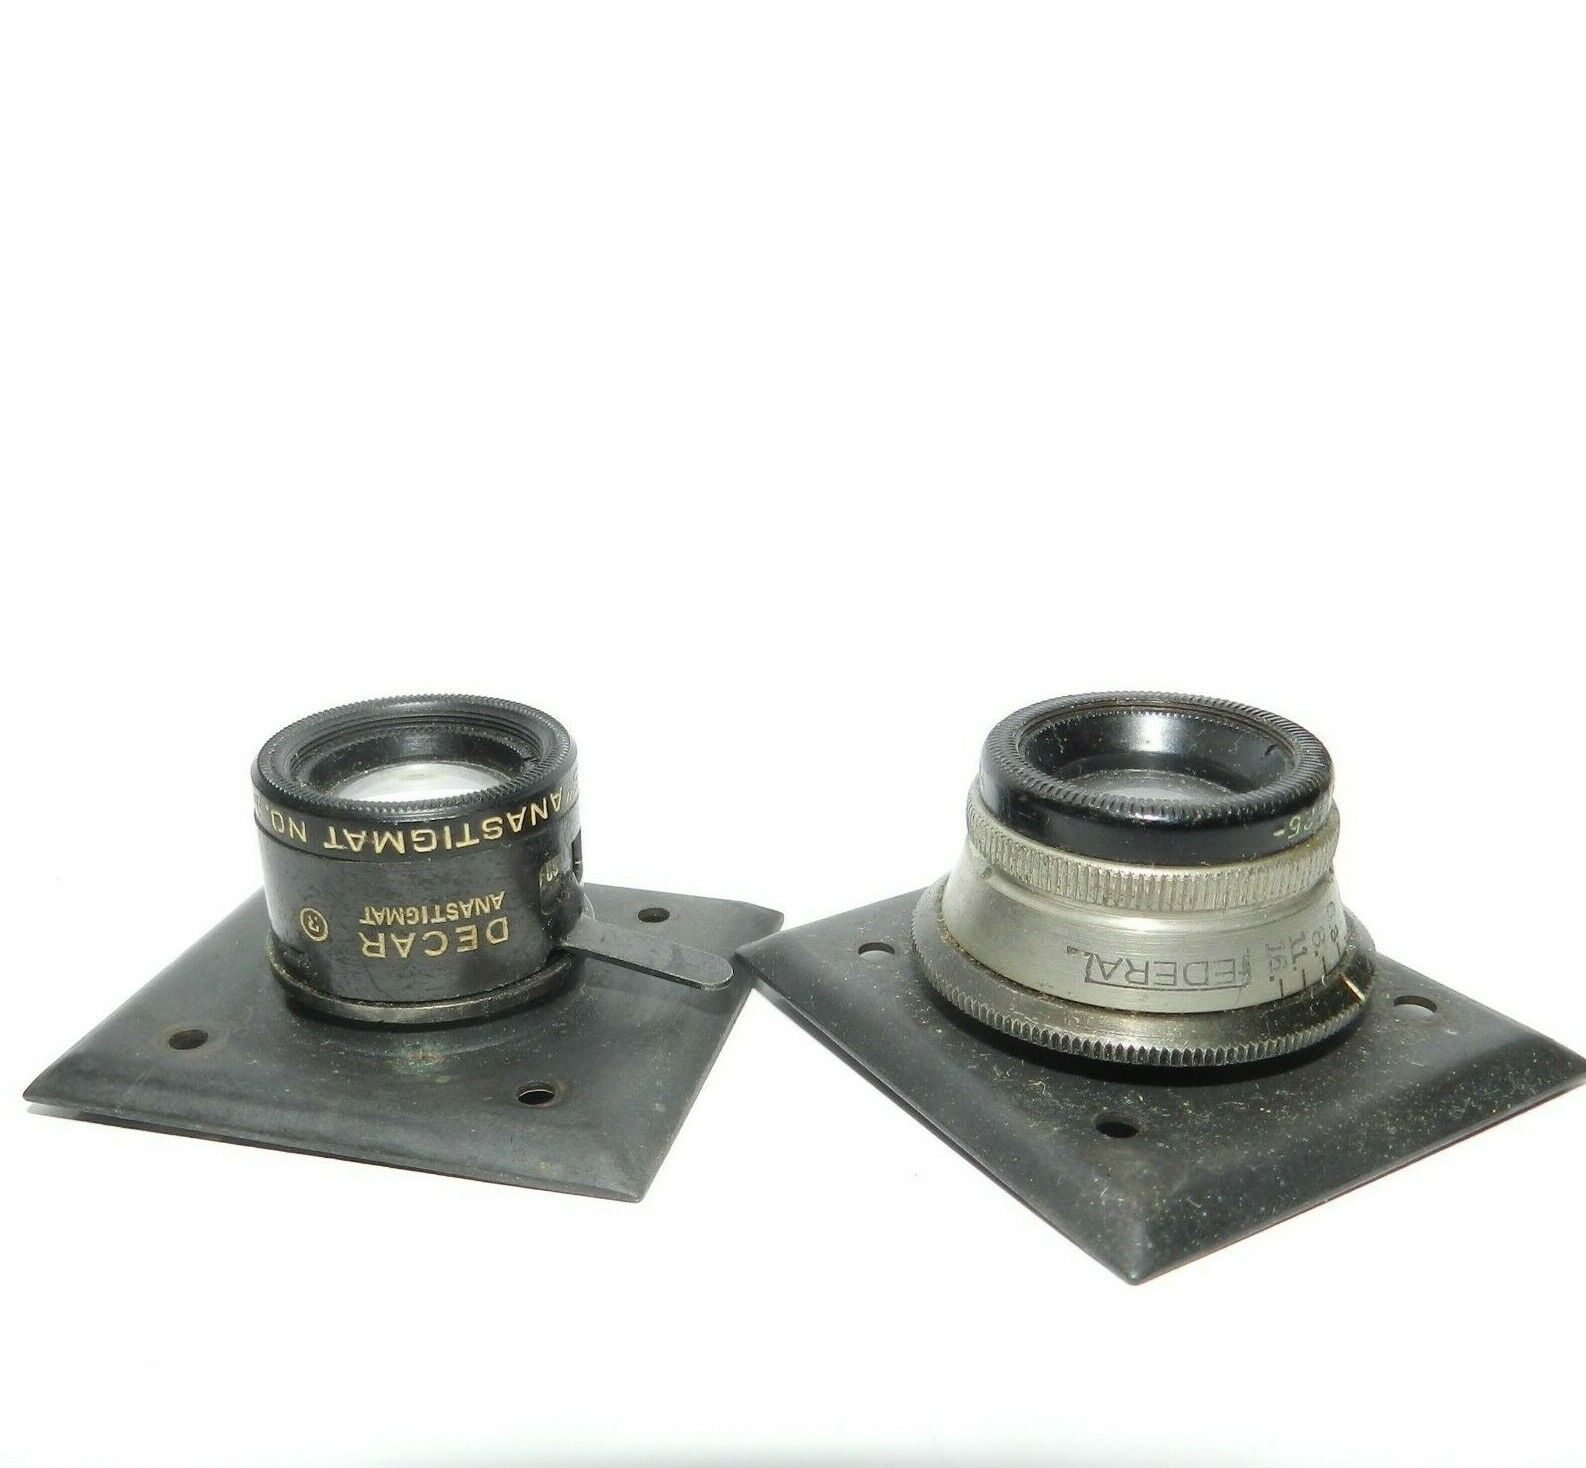 Federal Anastigmat lens 3.5" Decar lens no. 1430 and 1425    Federal